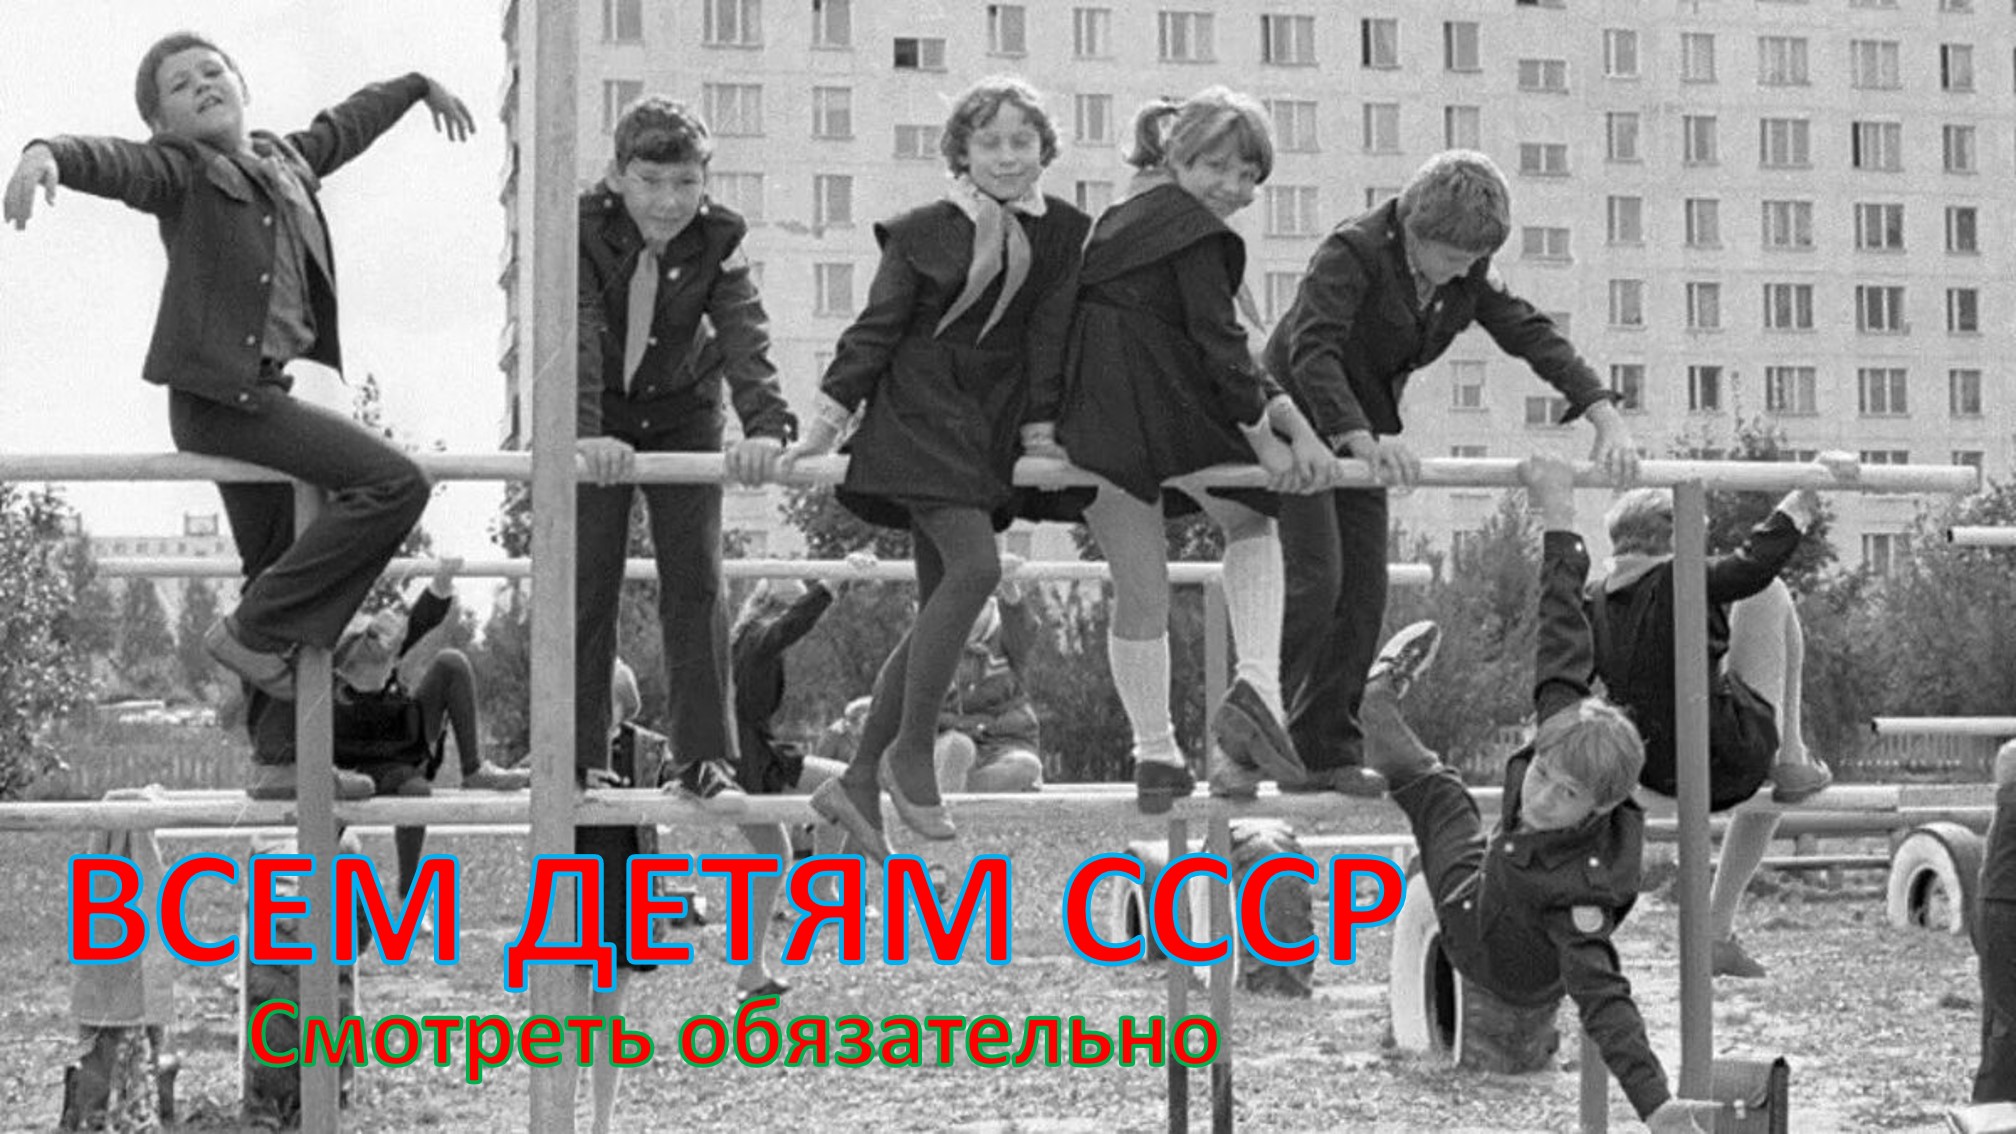 Старые игры детства. Советское детство. Советское детство во дворе. Счастливое советское детство. Советские дети во дворе.